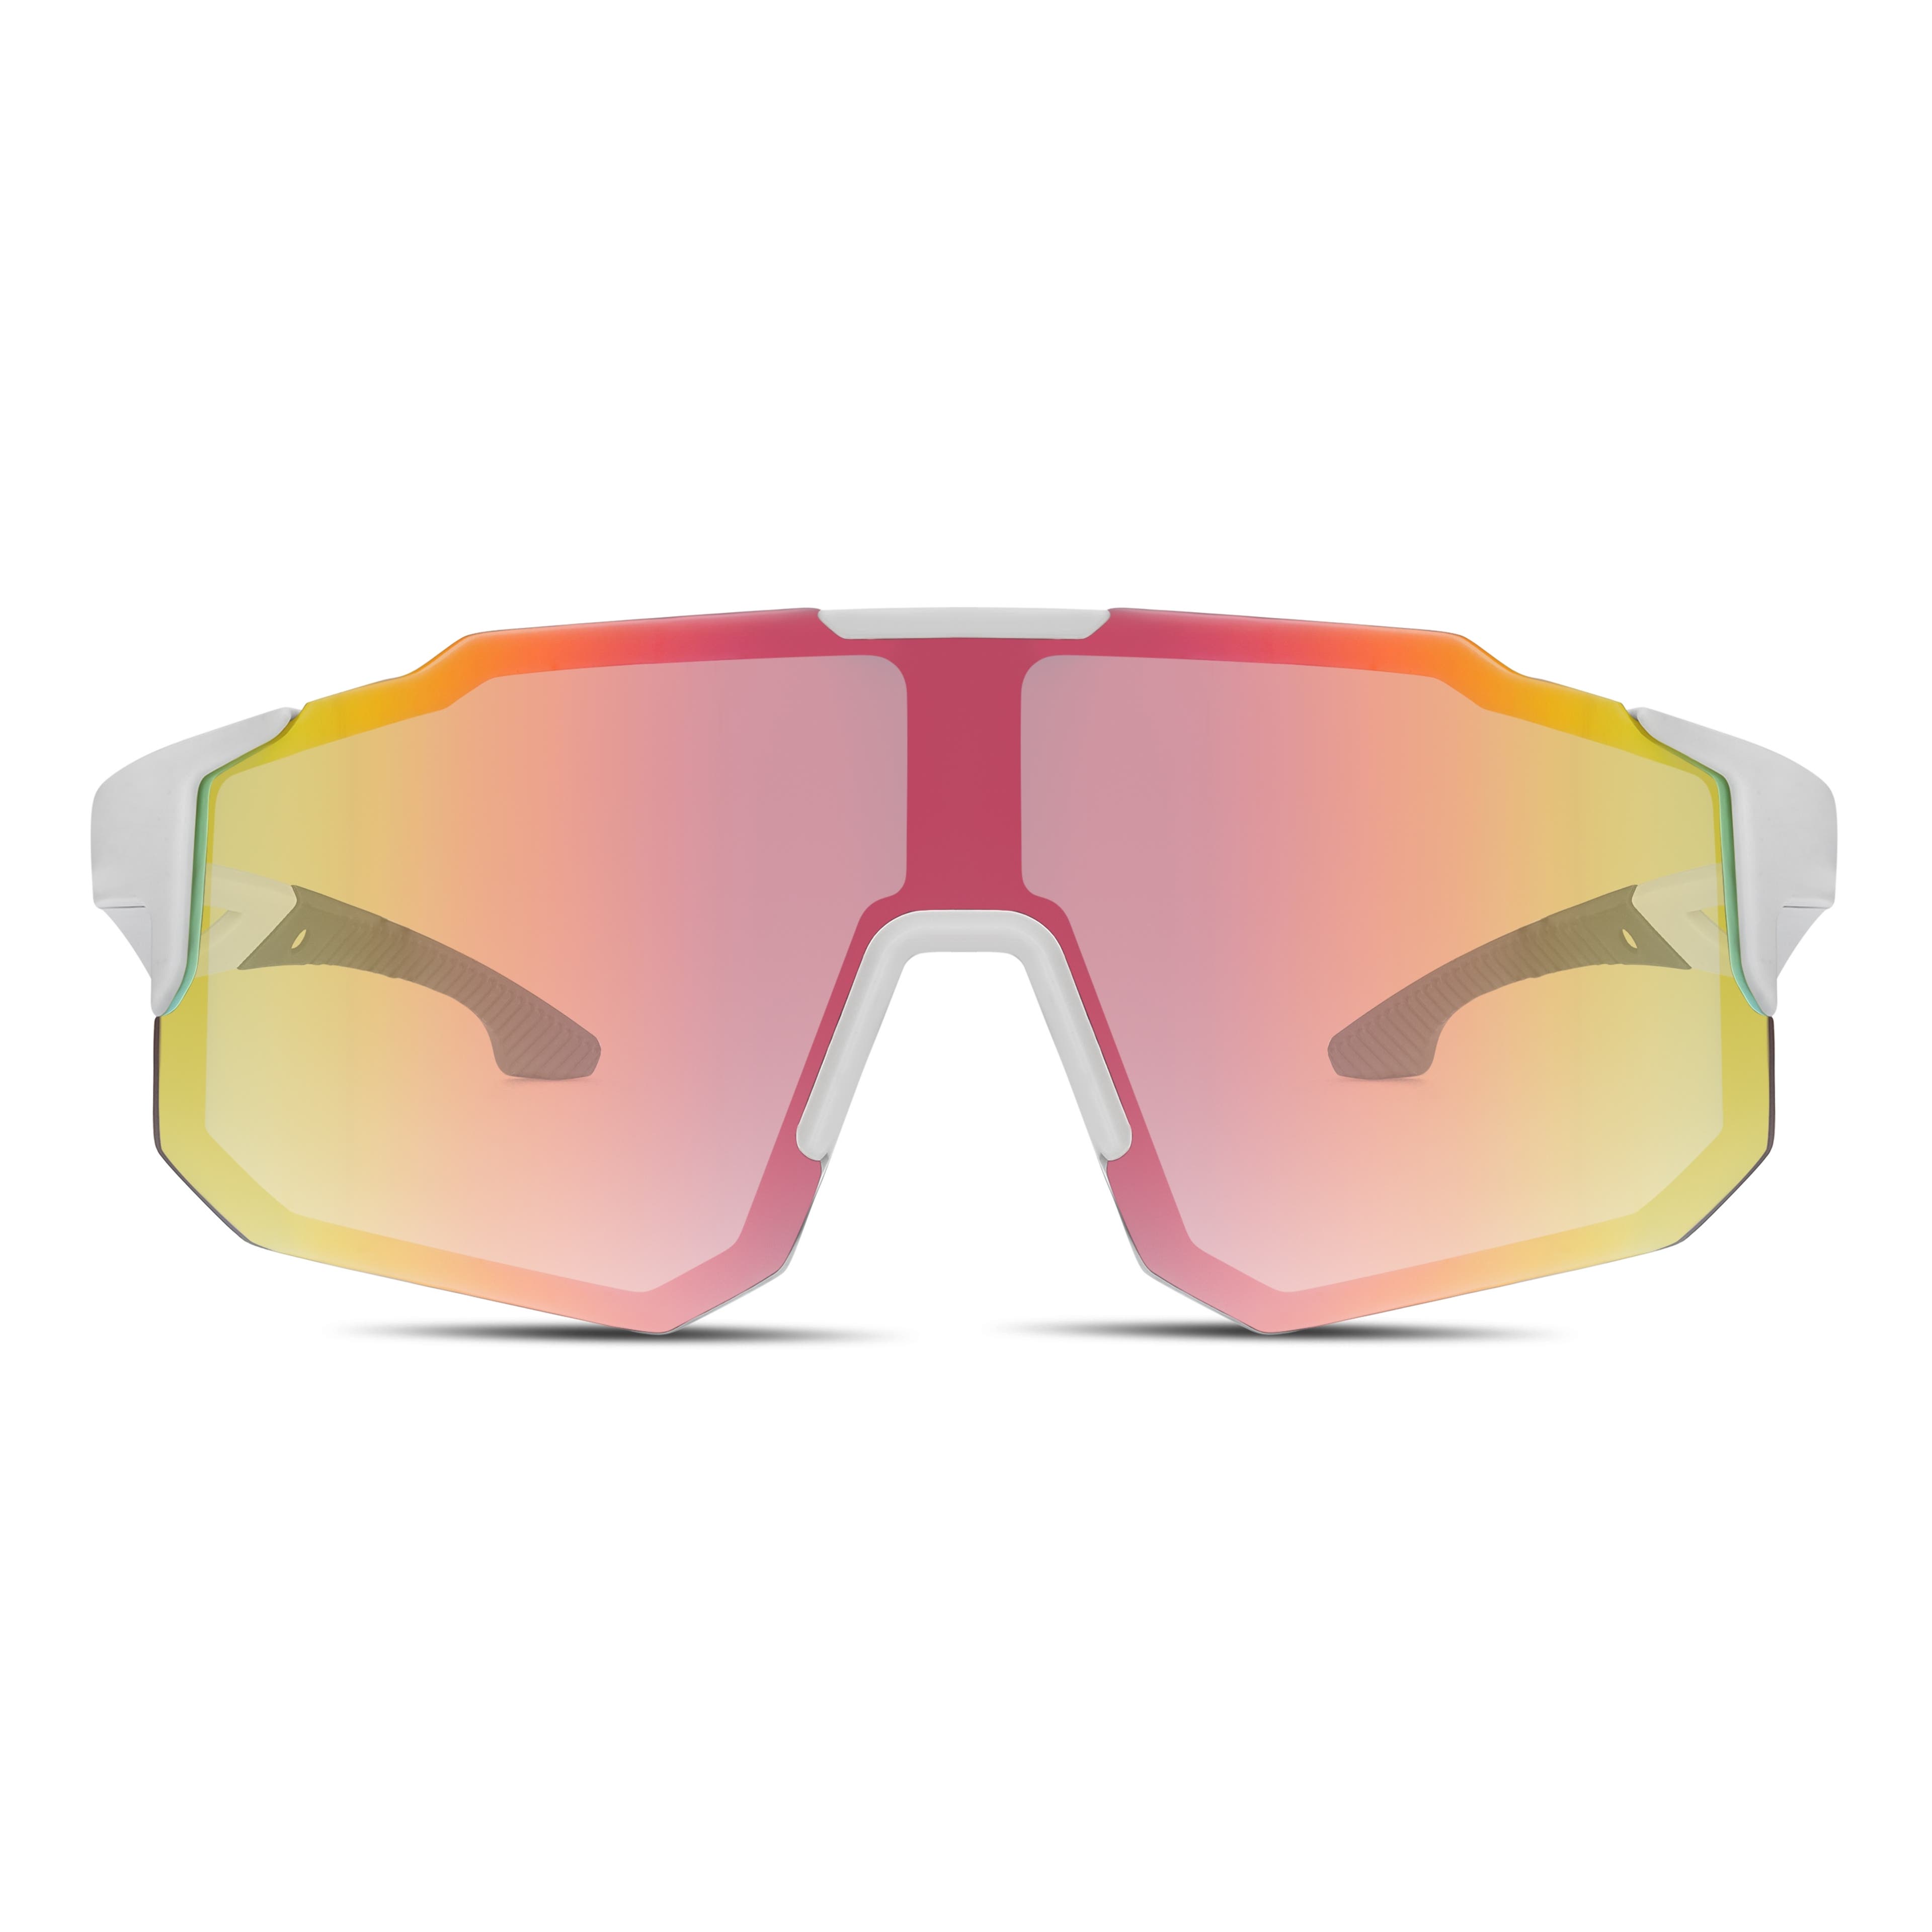 Red & White Wraparound Sports Sunglasses